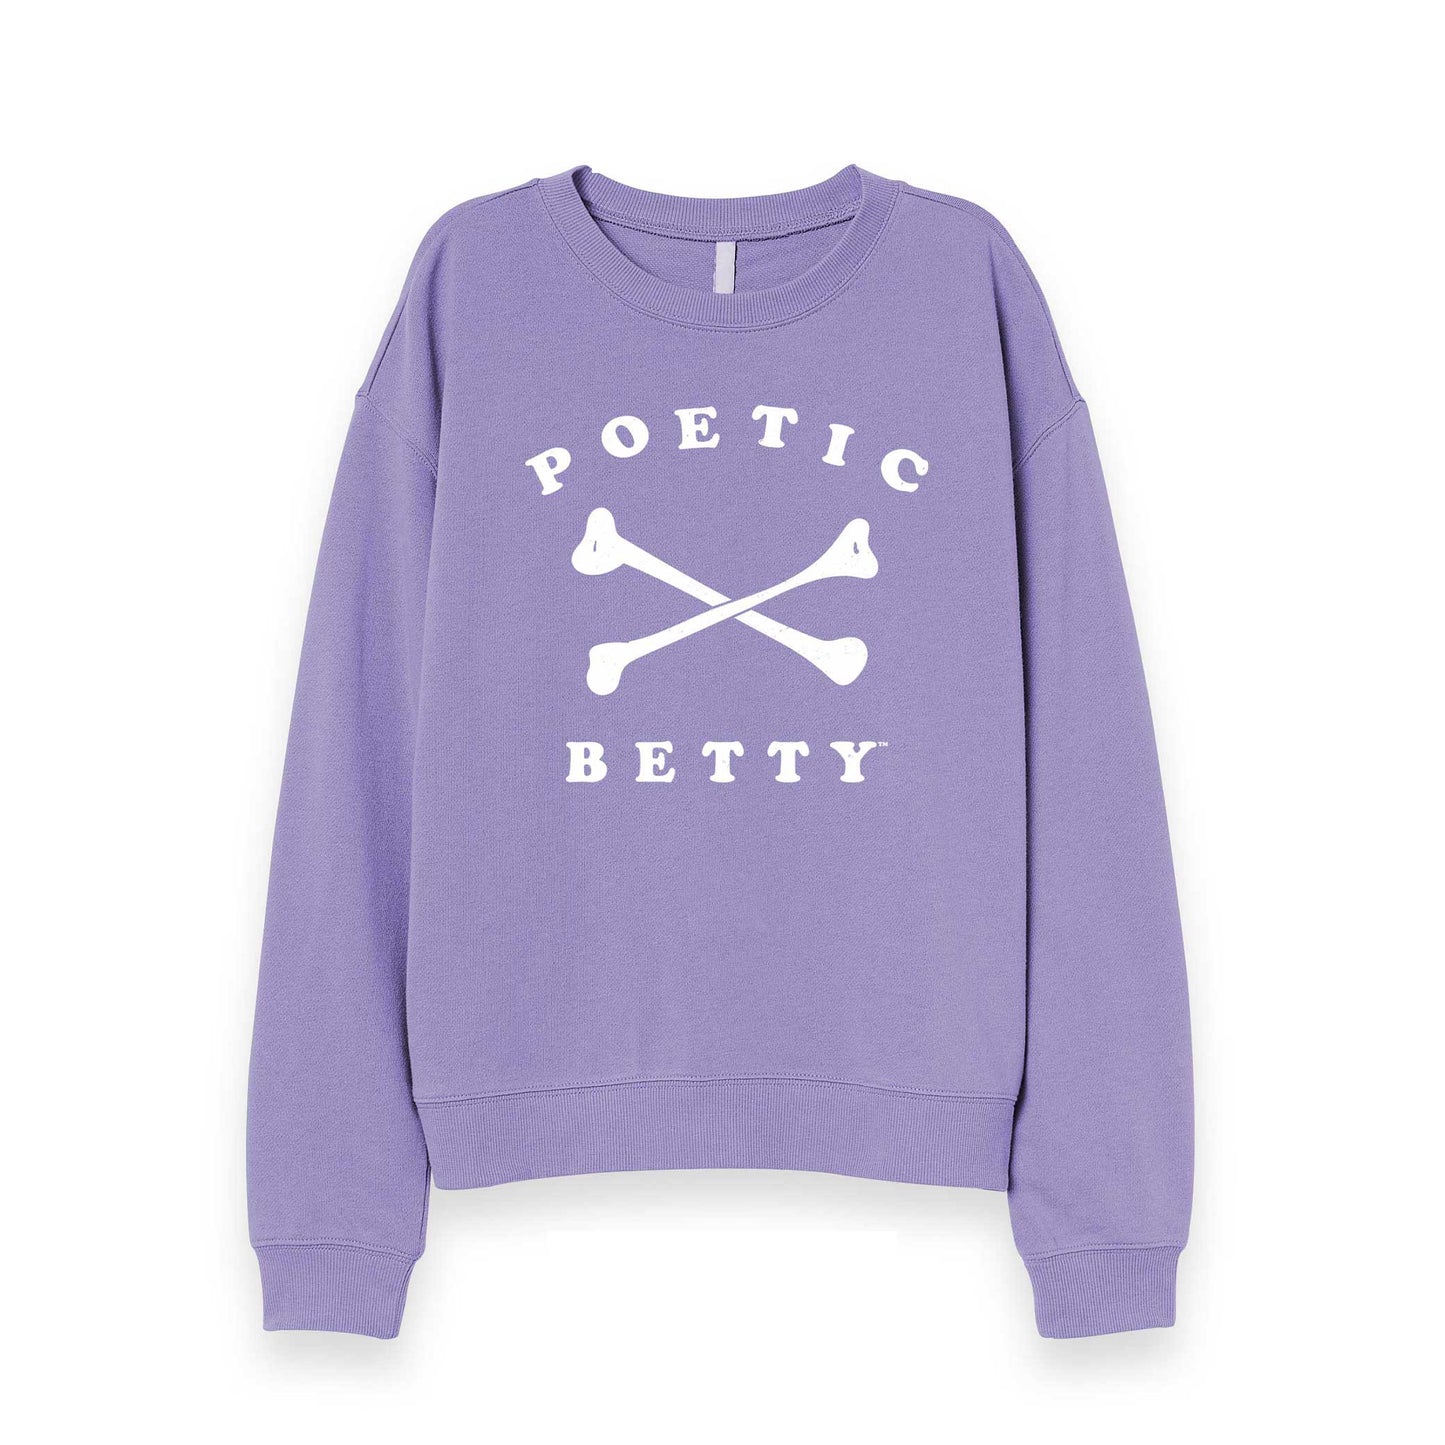 Poetic Betty™ Skull and Crossbones Since 2018 Emo 100% Cotton Unisex Sweatshirt